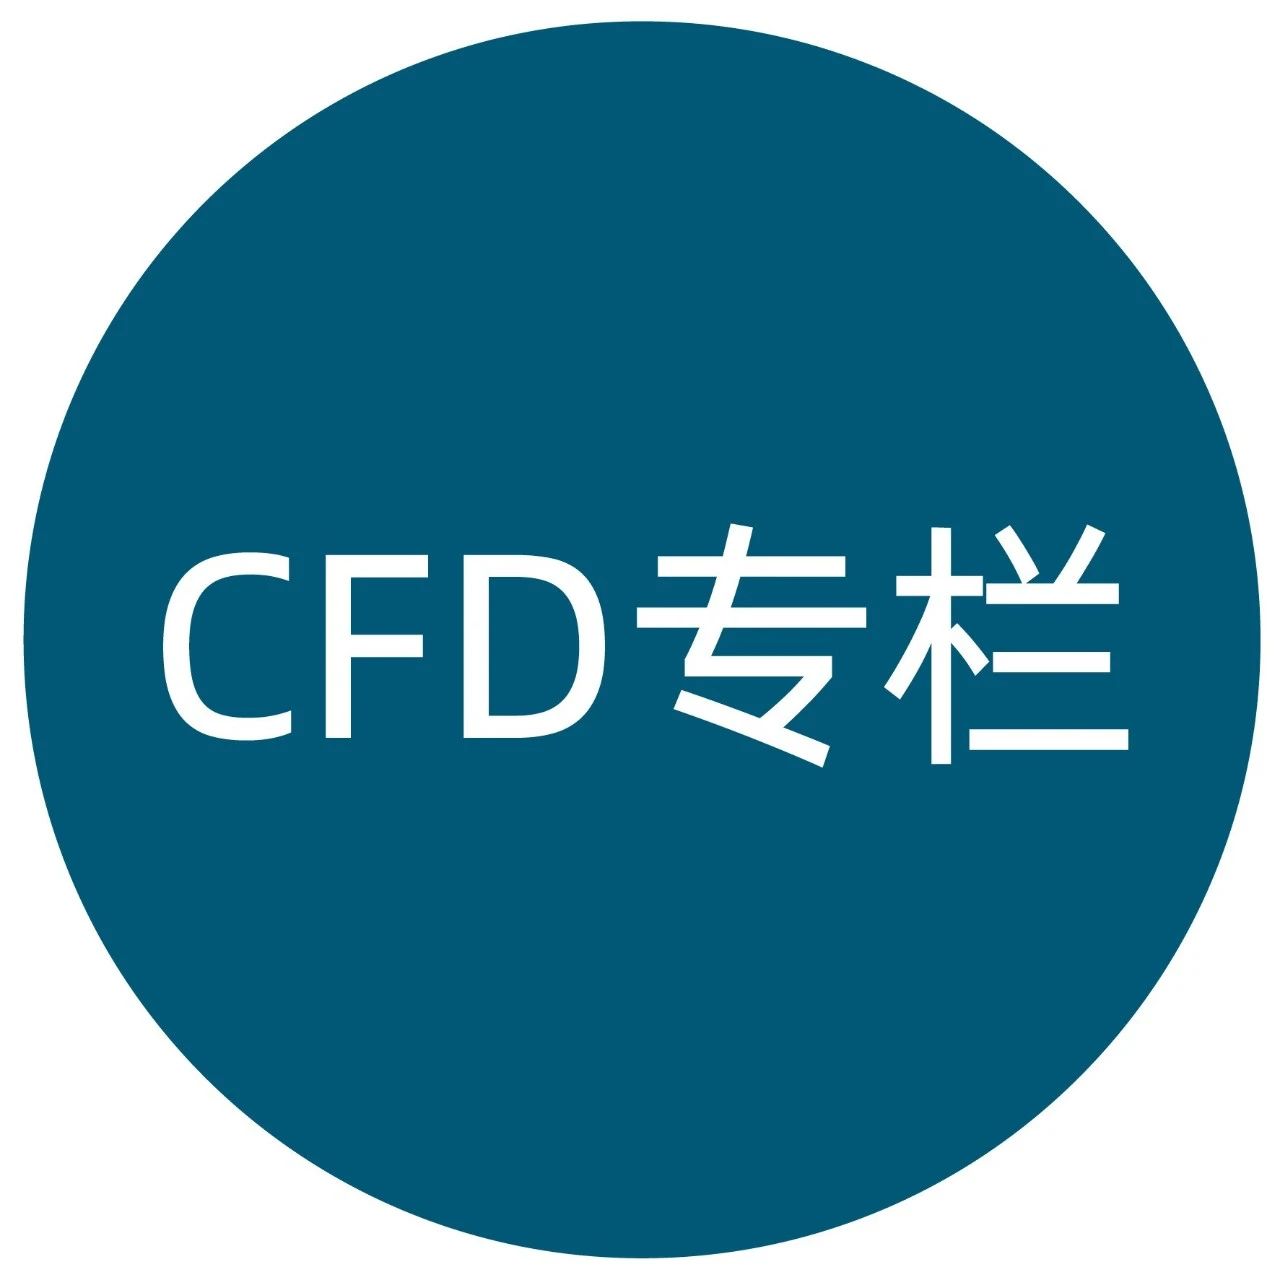 CFD专栏丨轴流风扇噪声CFD仿真试验对标